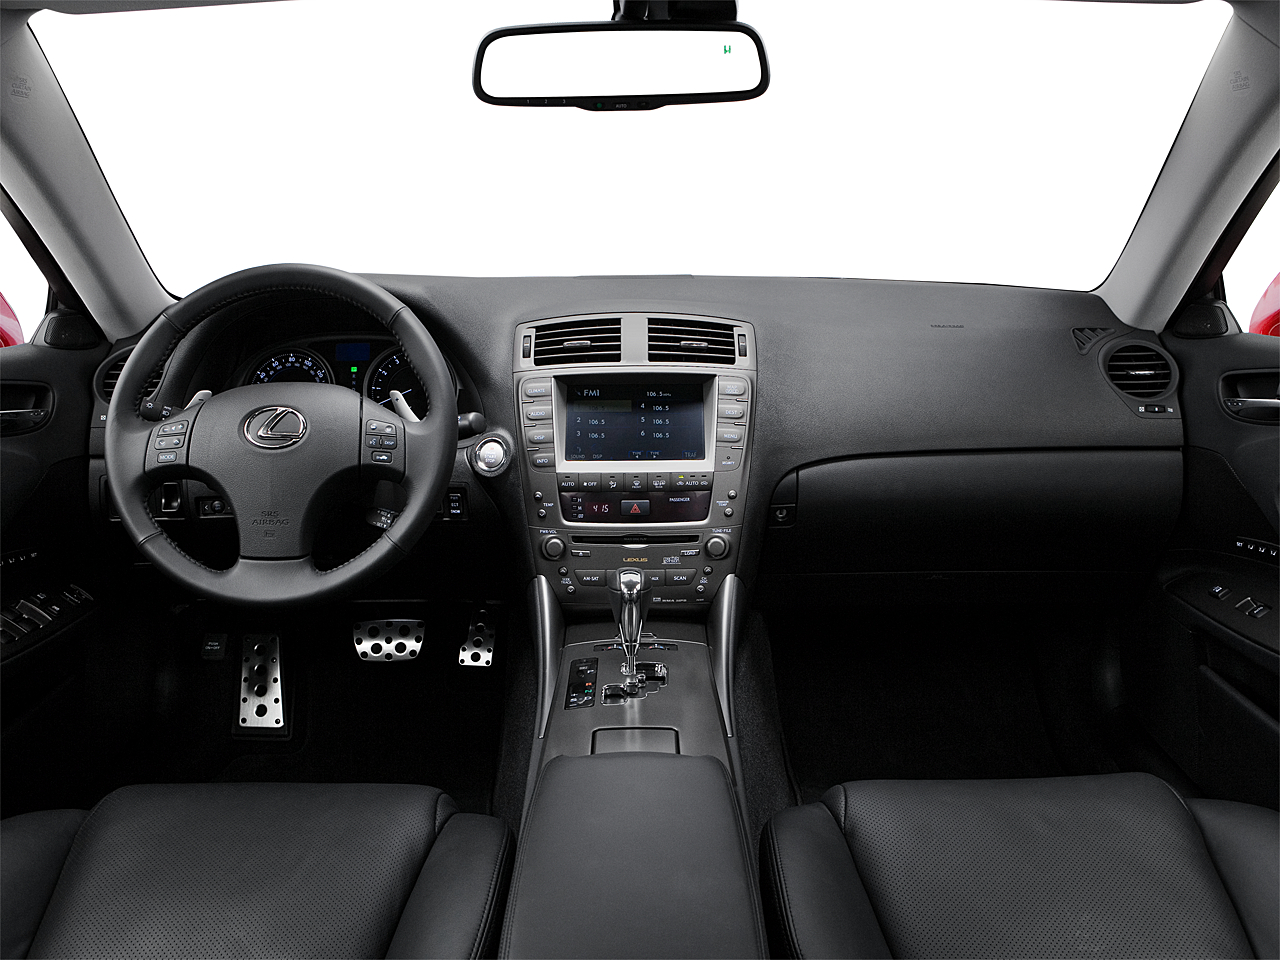 2008 Lexus IS 350 4dr Sedan - Research - GrooveCar